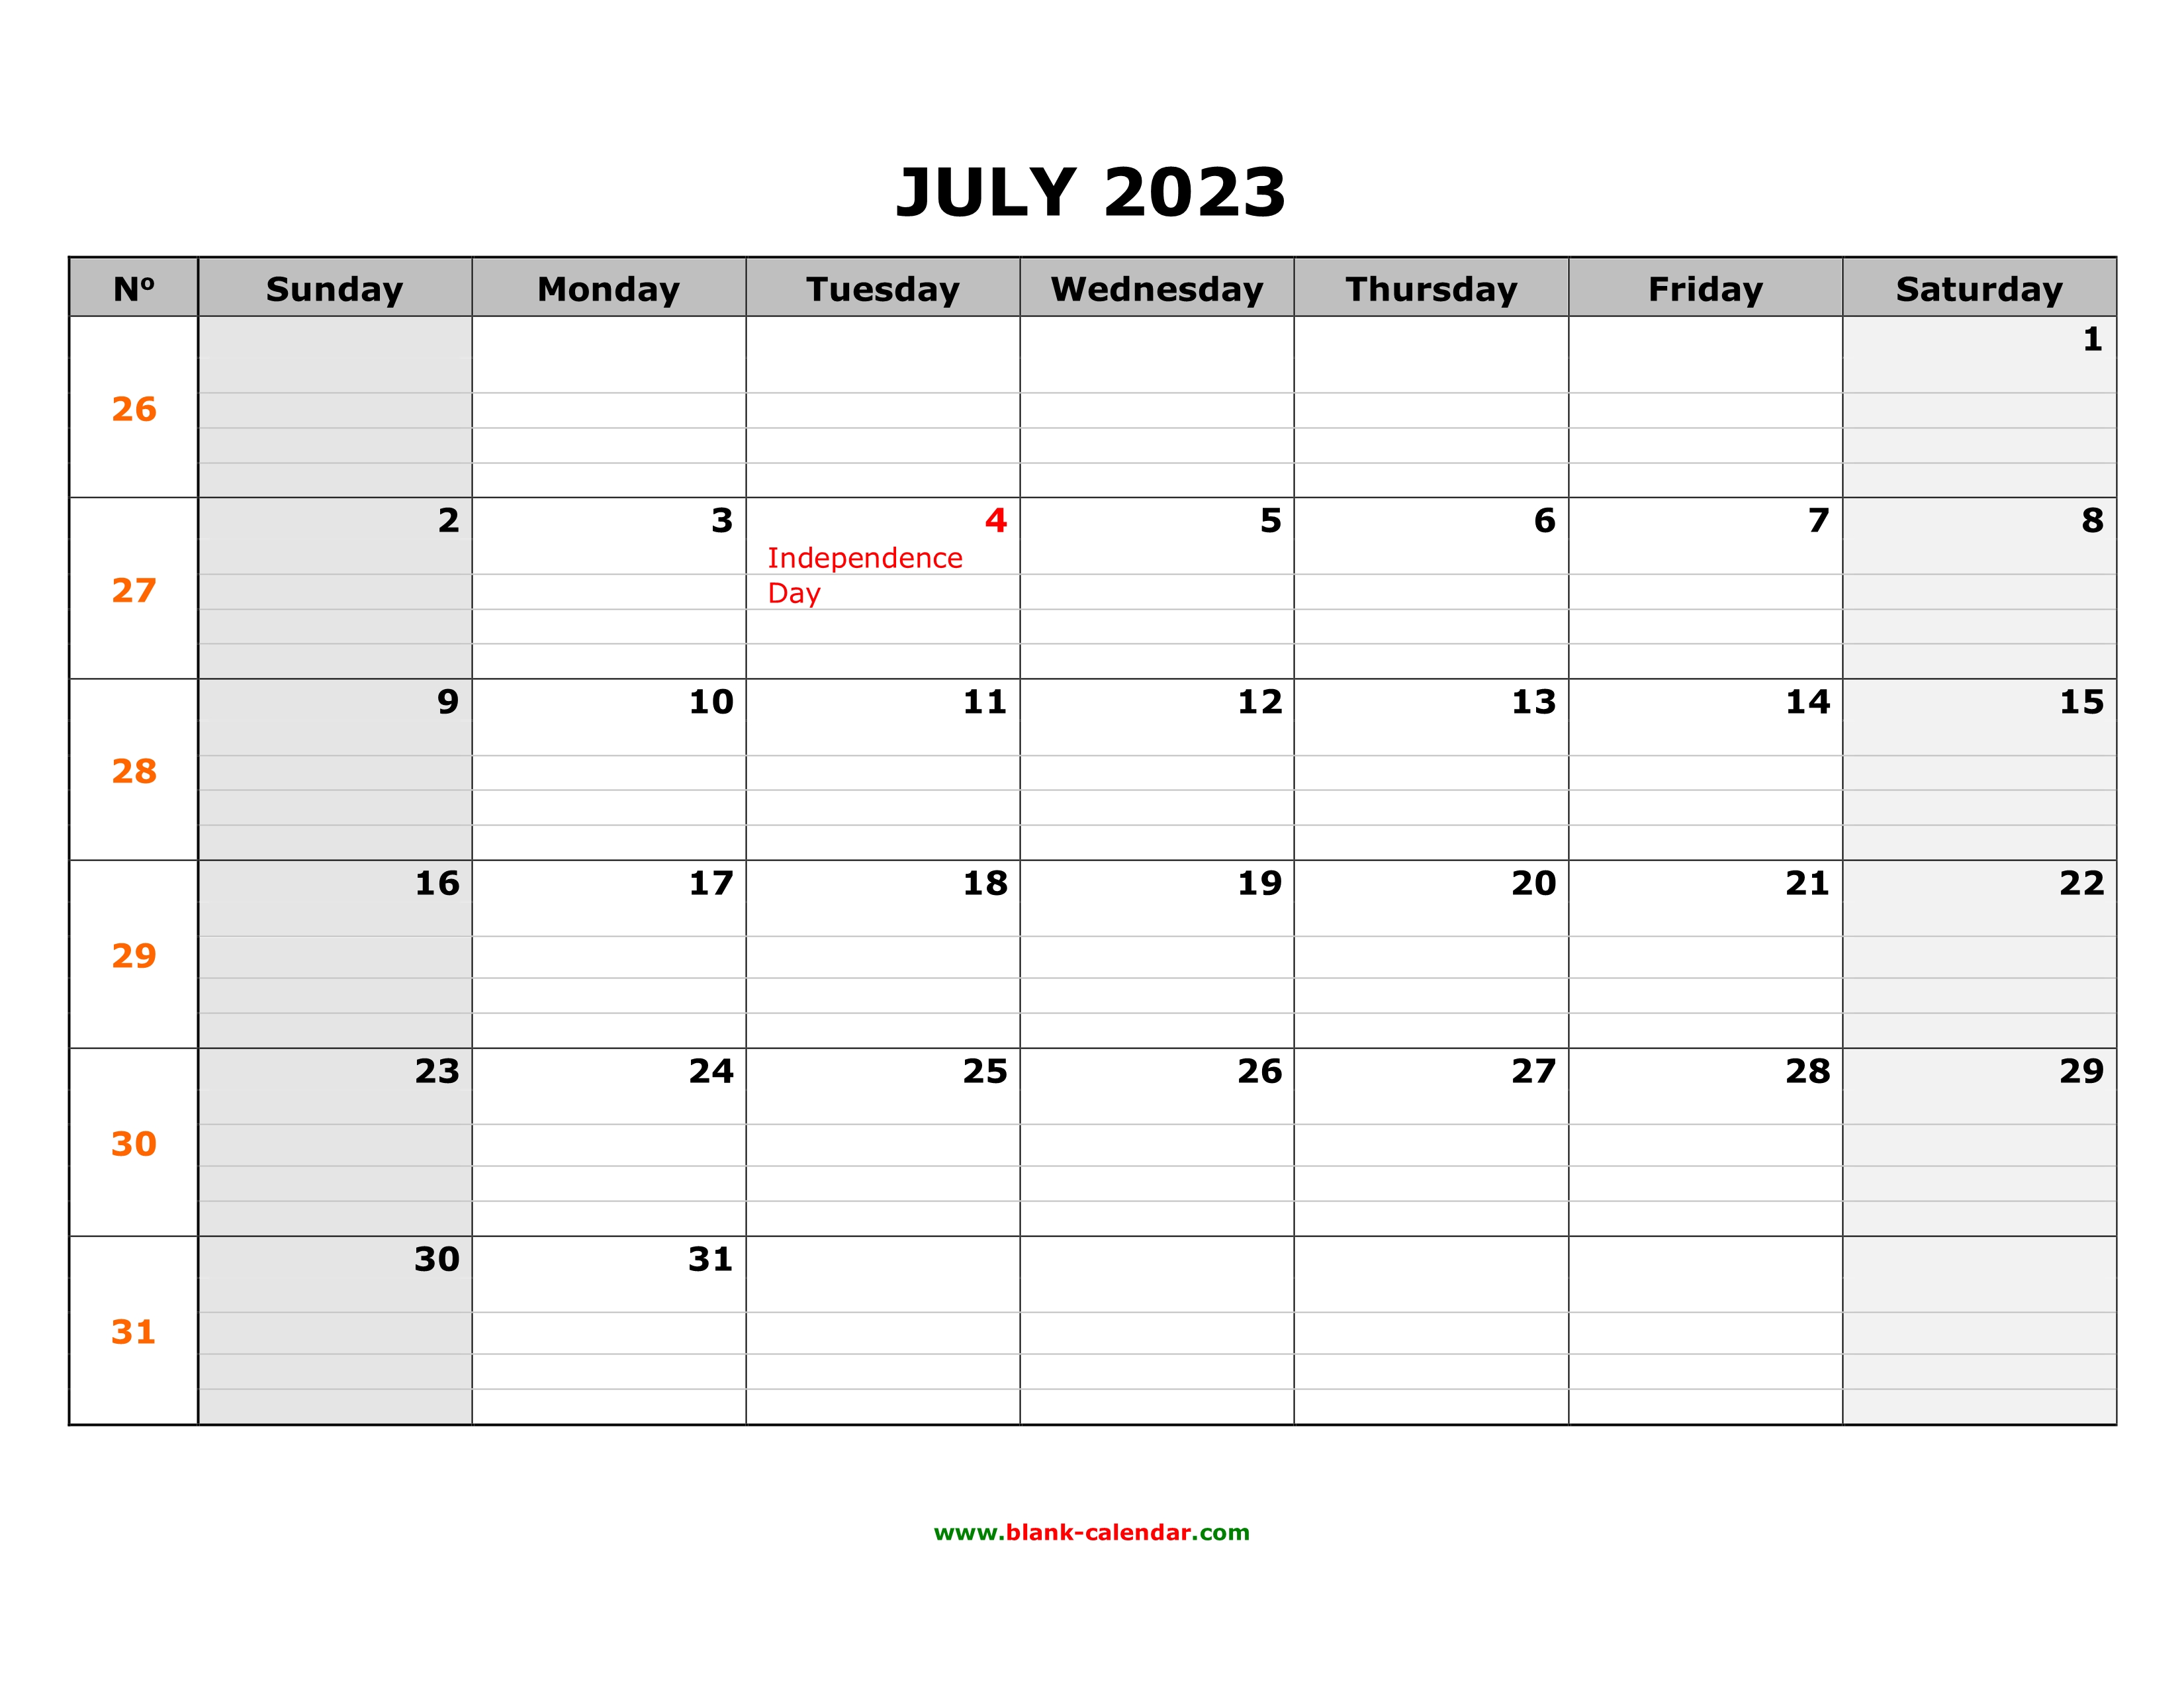 Saturday 15th July 2023 Blank Printable Calendar PELAJARAN